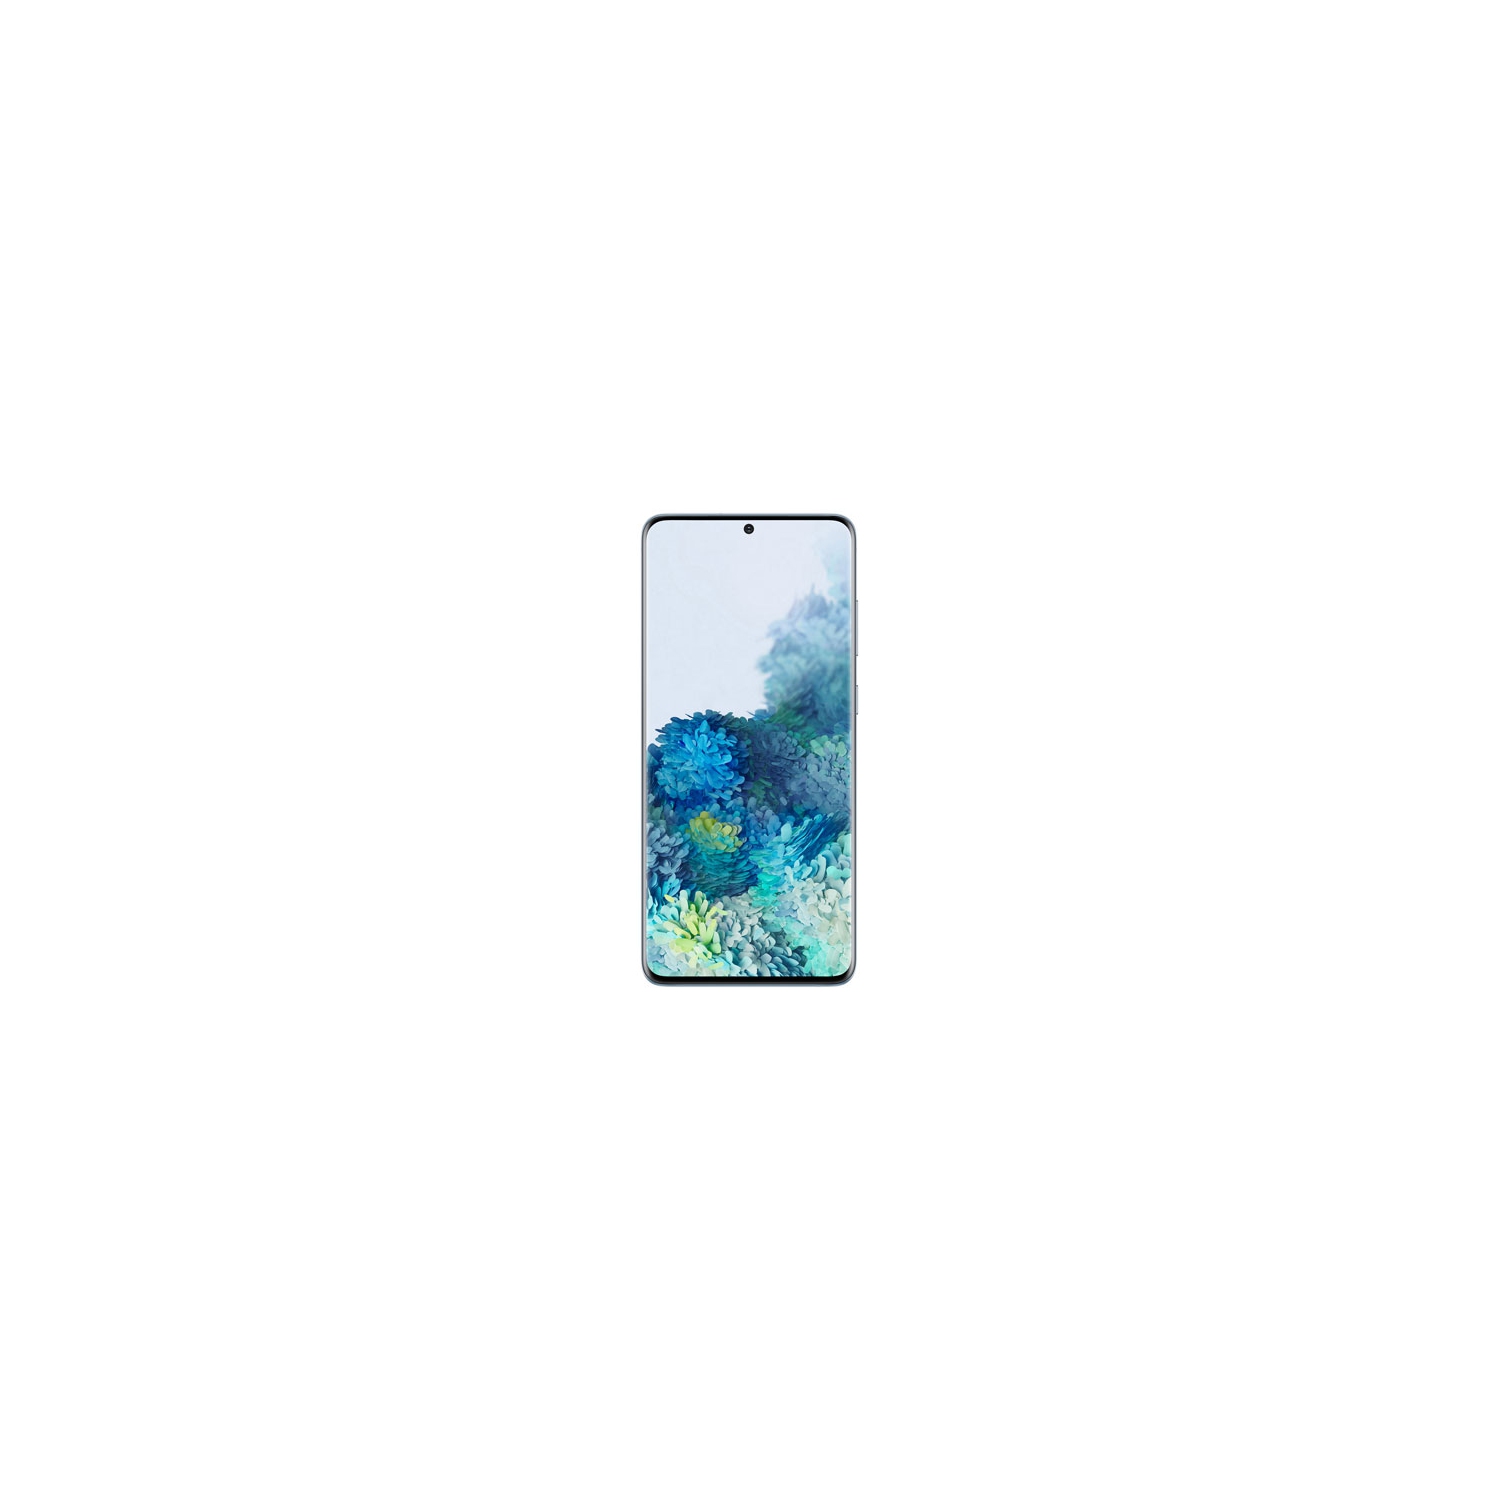 Refurbished (Excellent) - Samsung Galaxy S20+ (Plus) 5G 128GB Smartphone - Cloud Blue - Unlocked - Certified Refurbished